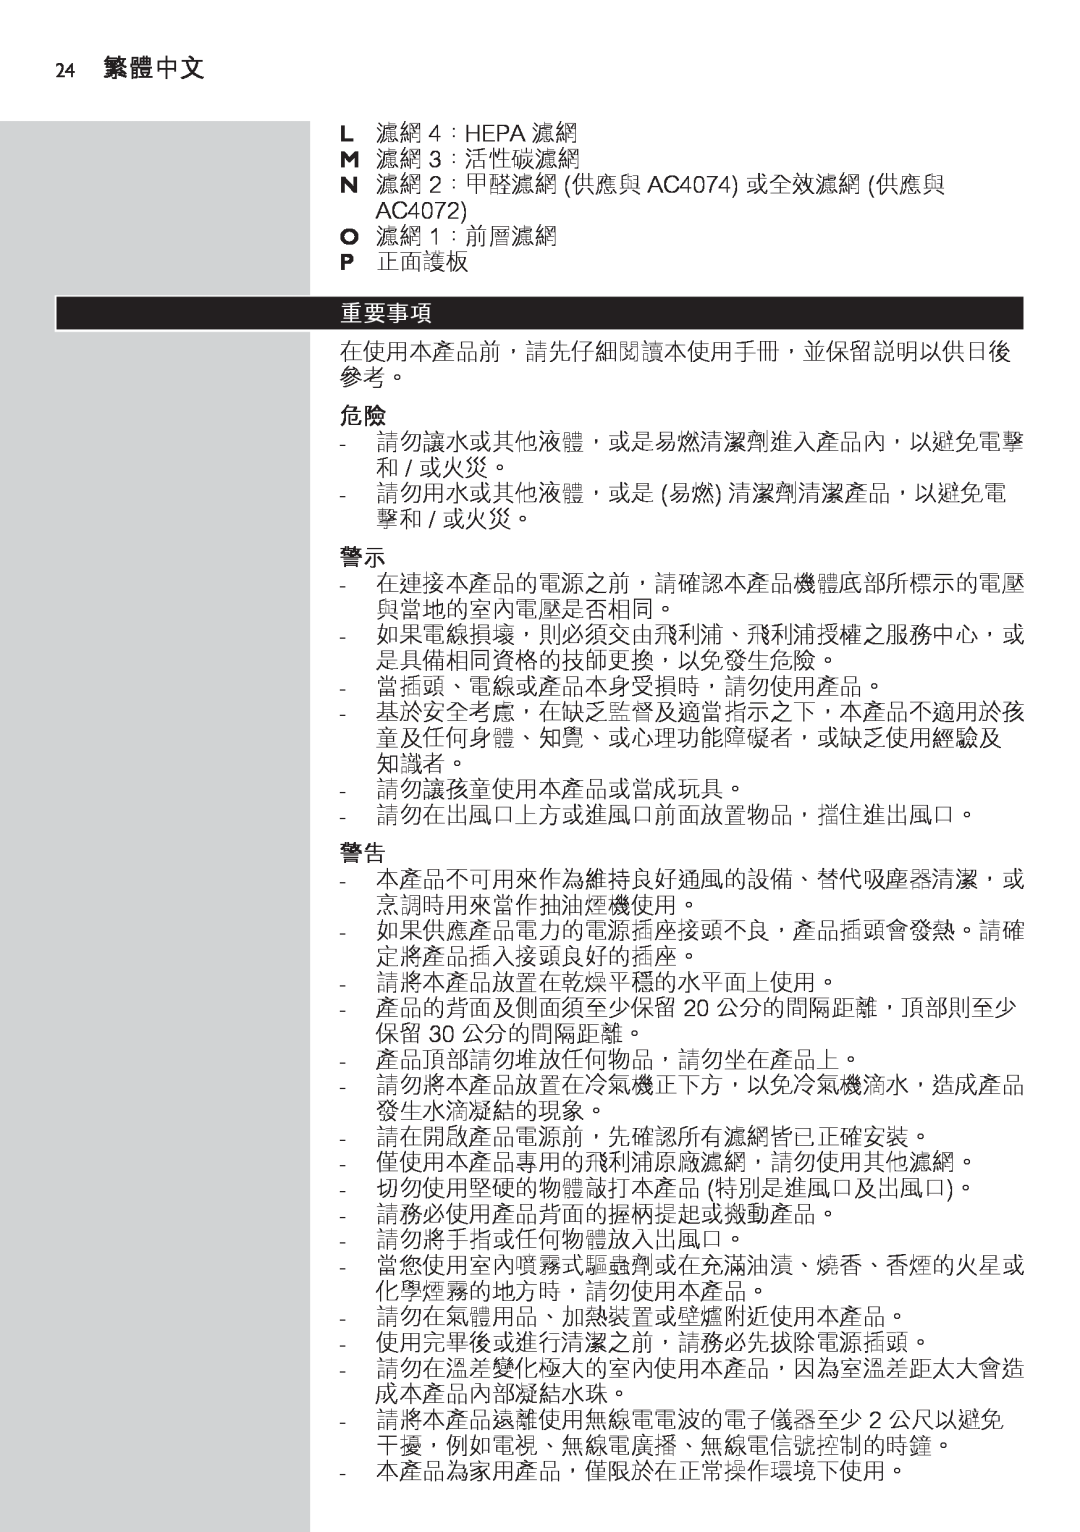 Philips AC4074 manual 24繁體中文, 重要事項 